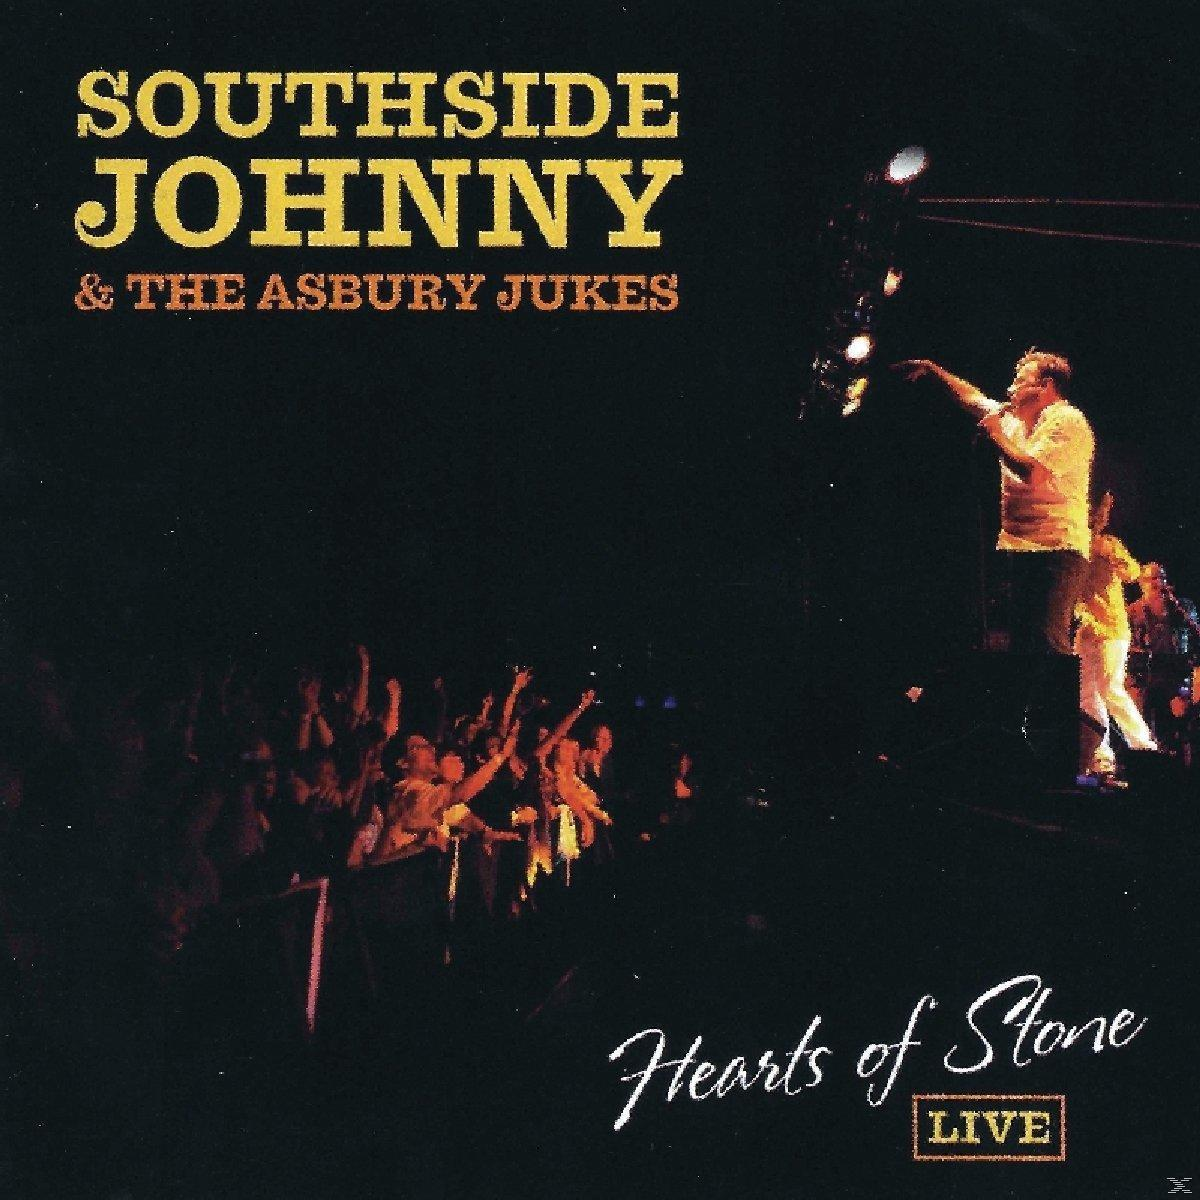 - Jukes Stone Of Live - Hearts Asbury The Johnny, Southside (CD)